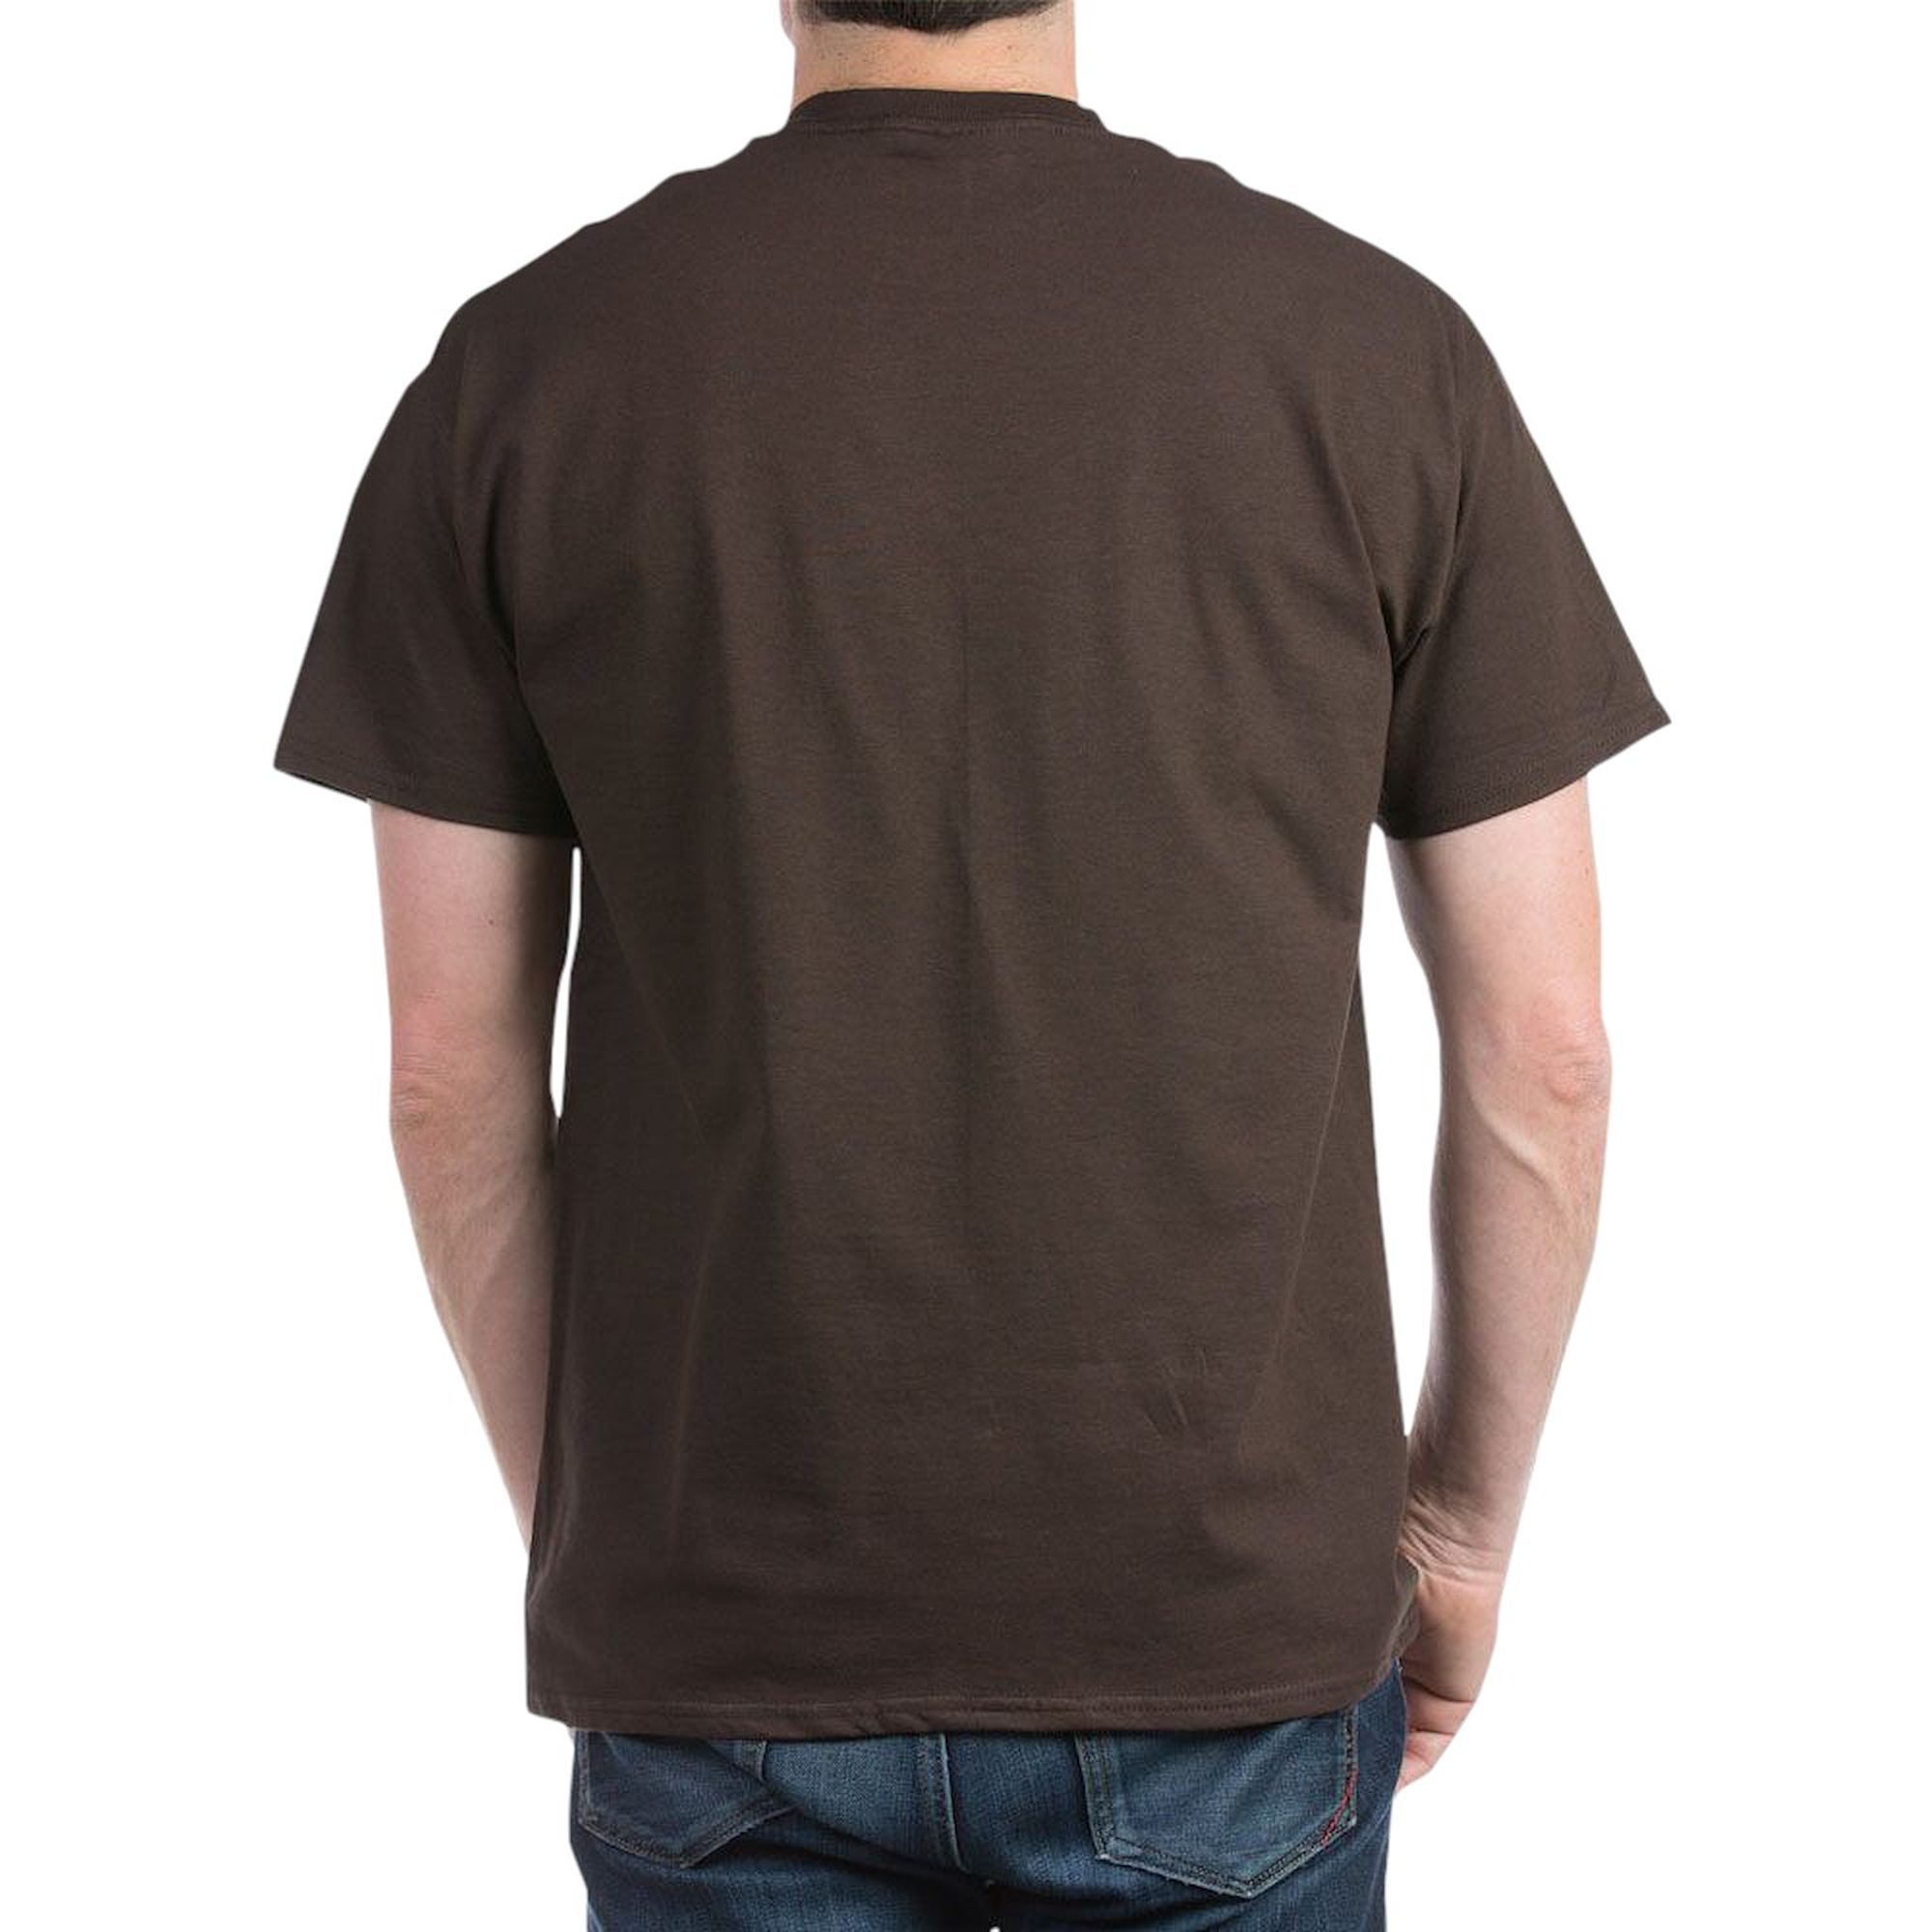 CafePress - US Navy Proud Navy Uncle Dark T Shirt - 100% Cotton T-Shirt - image 2 of 4